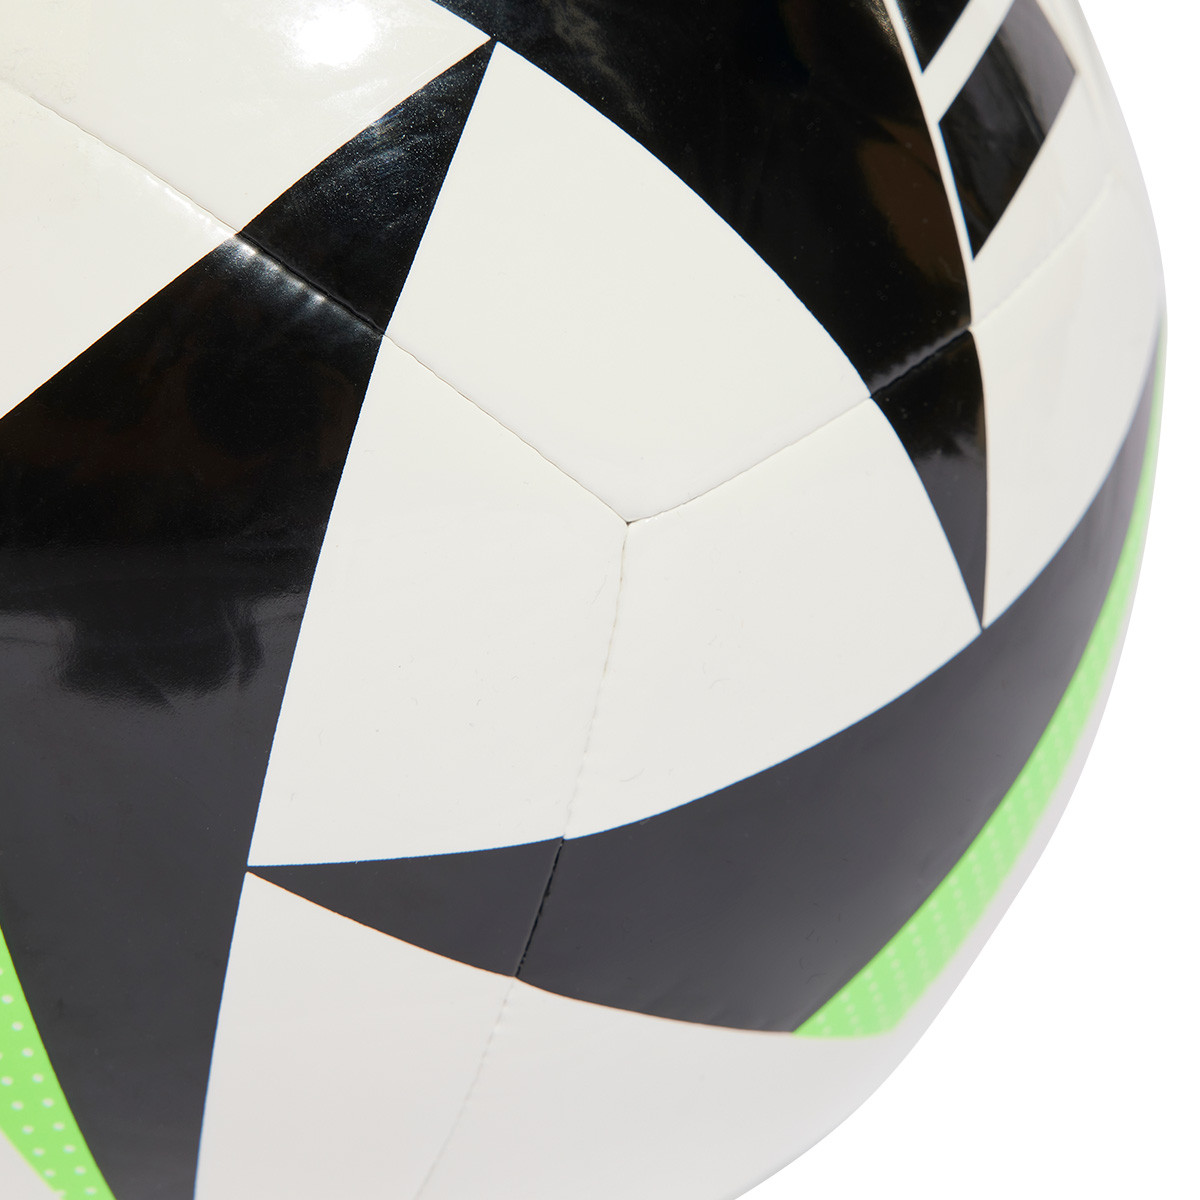 Ball adidas Messi Club White-Black-Solar Red - Fútbol Emotion